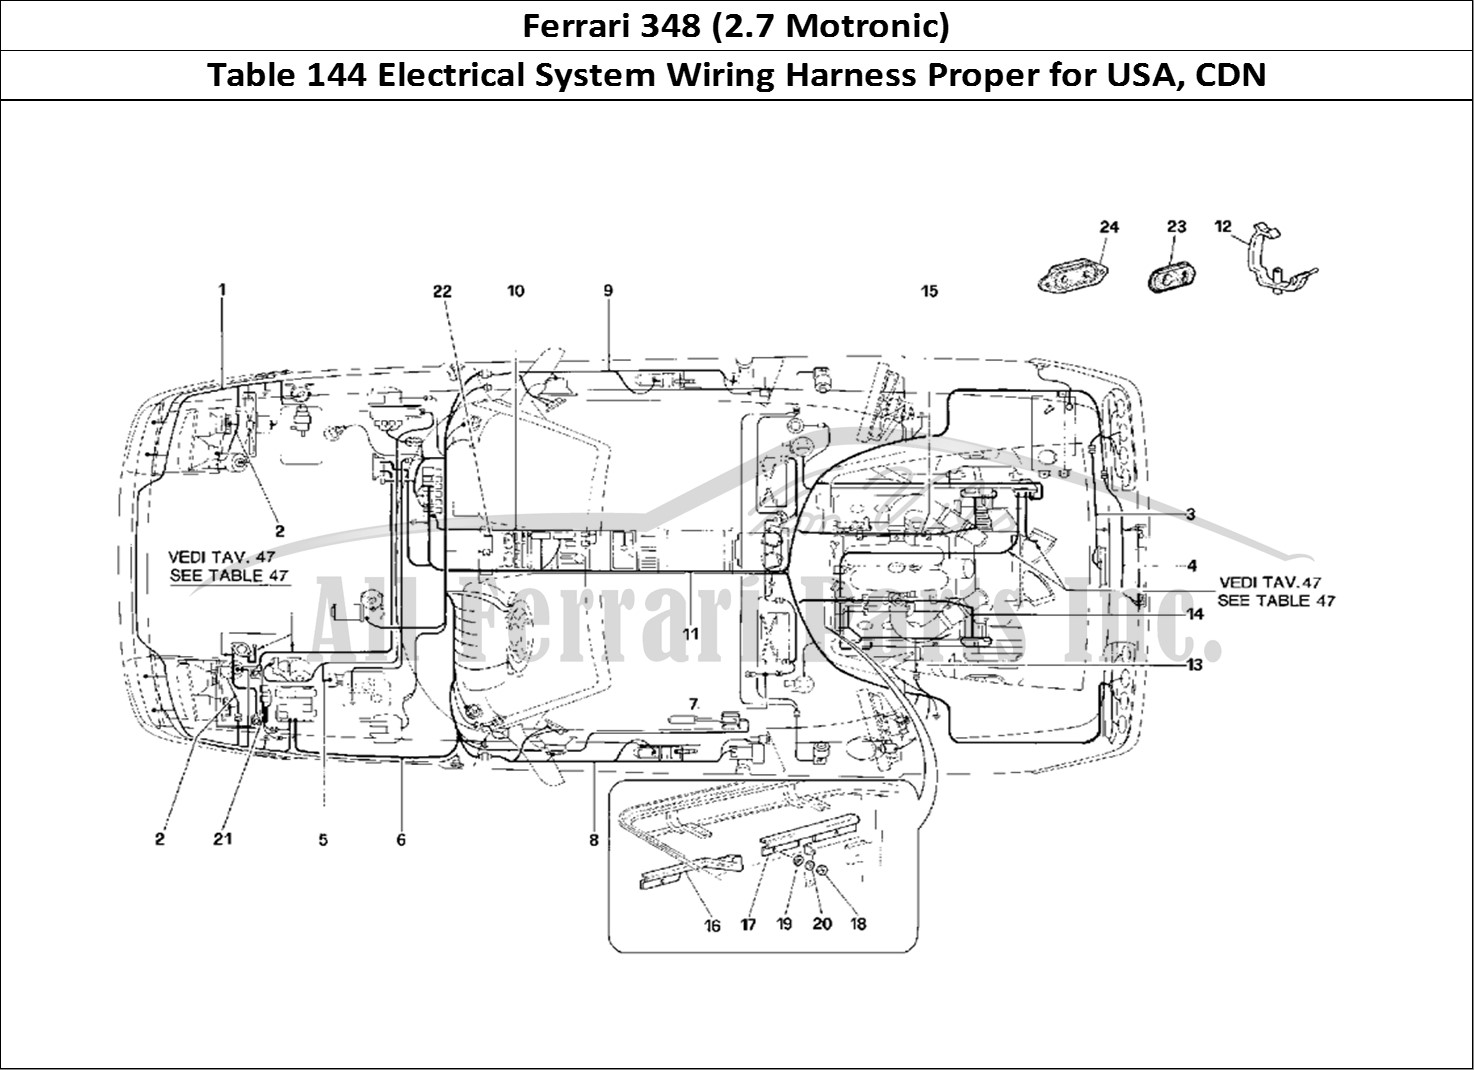 Ferrari Parts Ferrari 348 (2.7 Motronic) Page 144 Electrical System -Valid